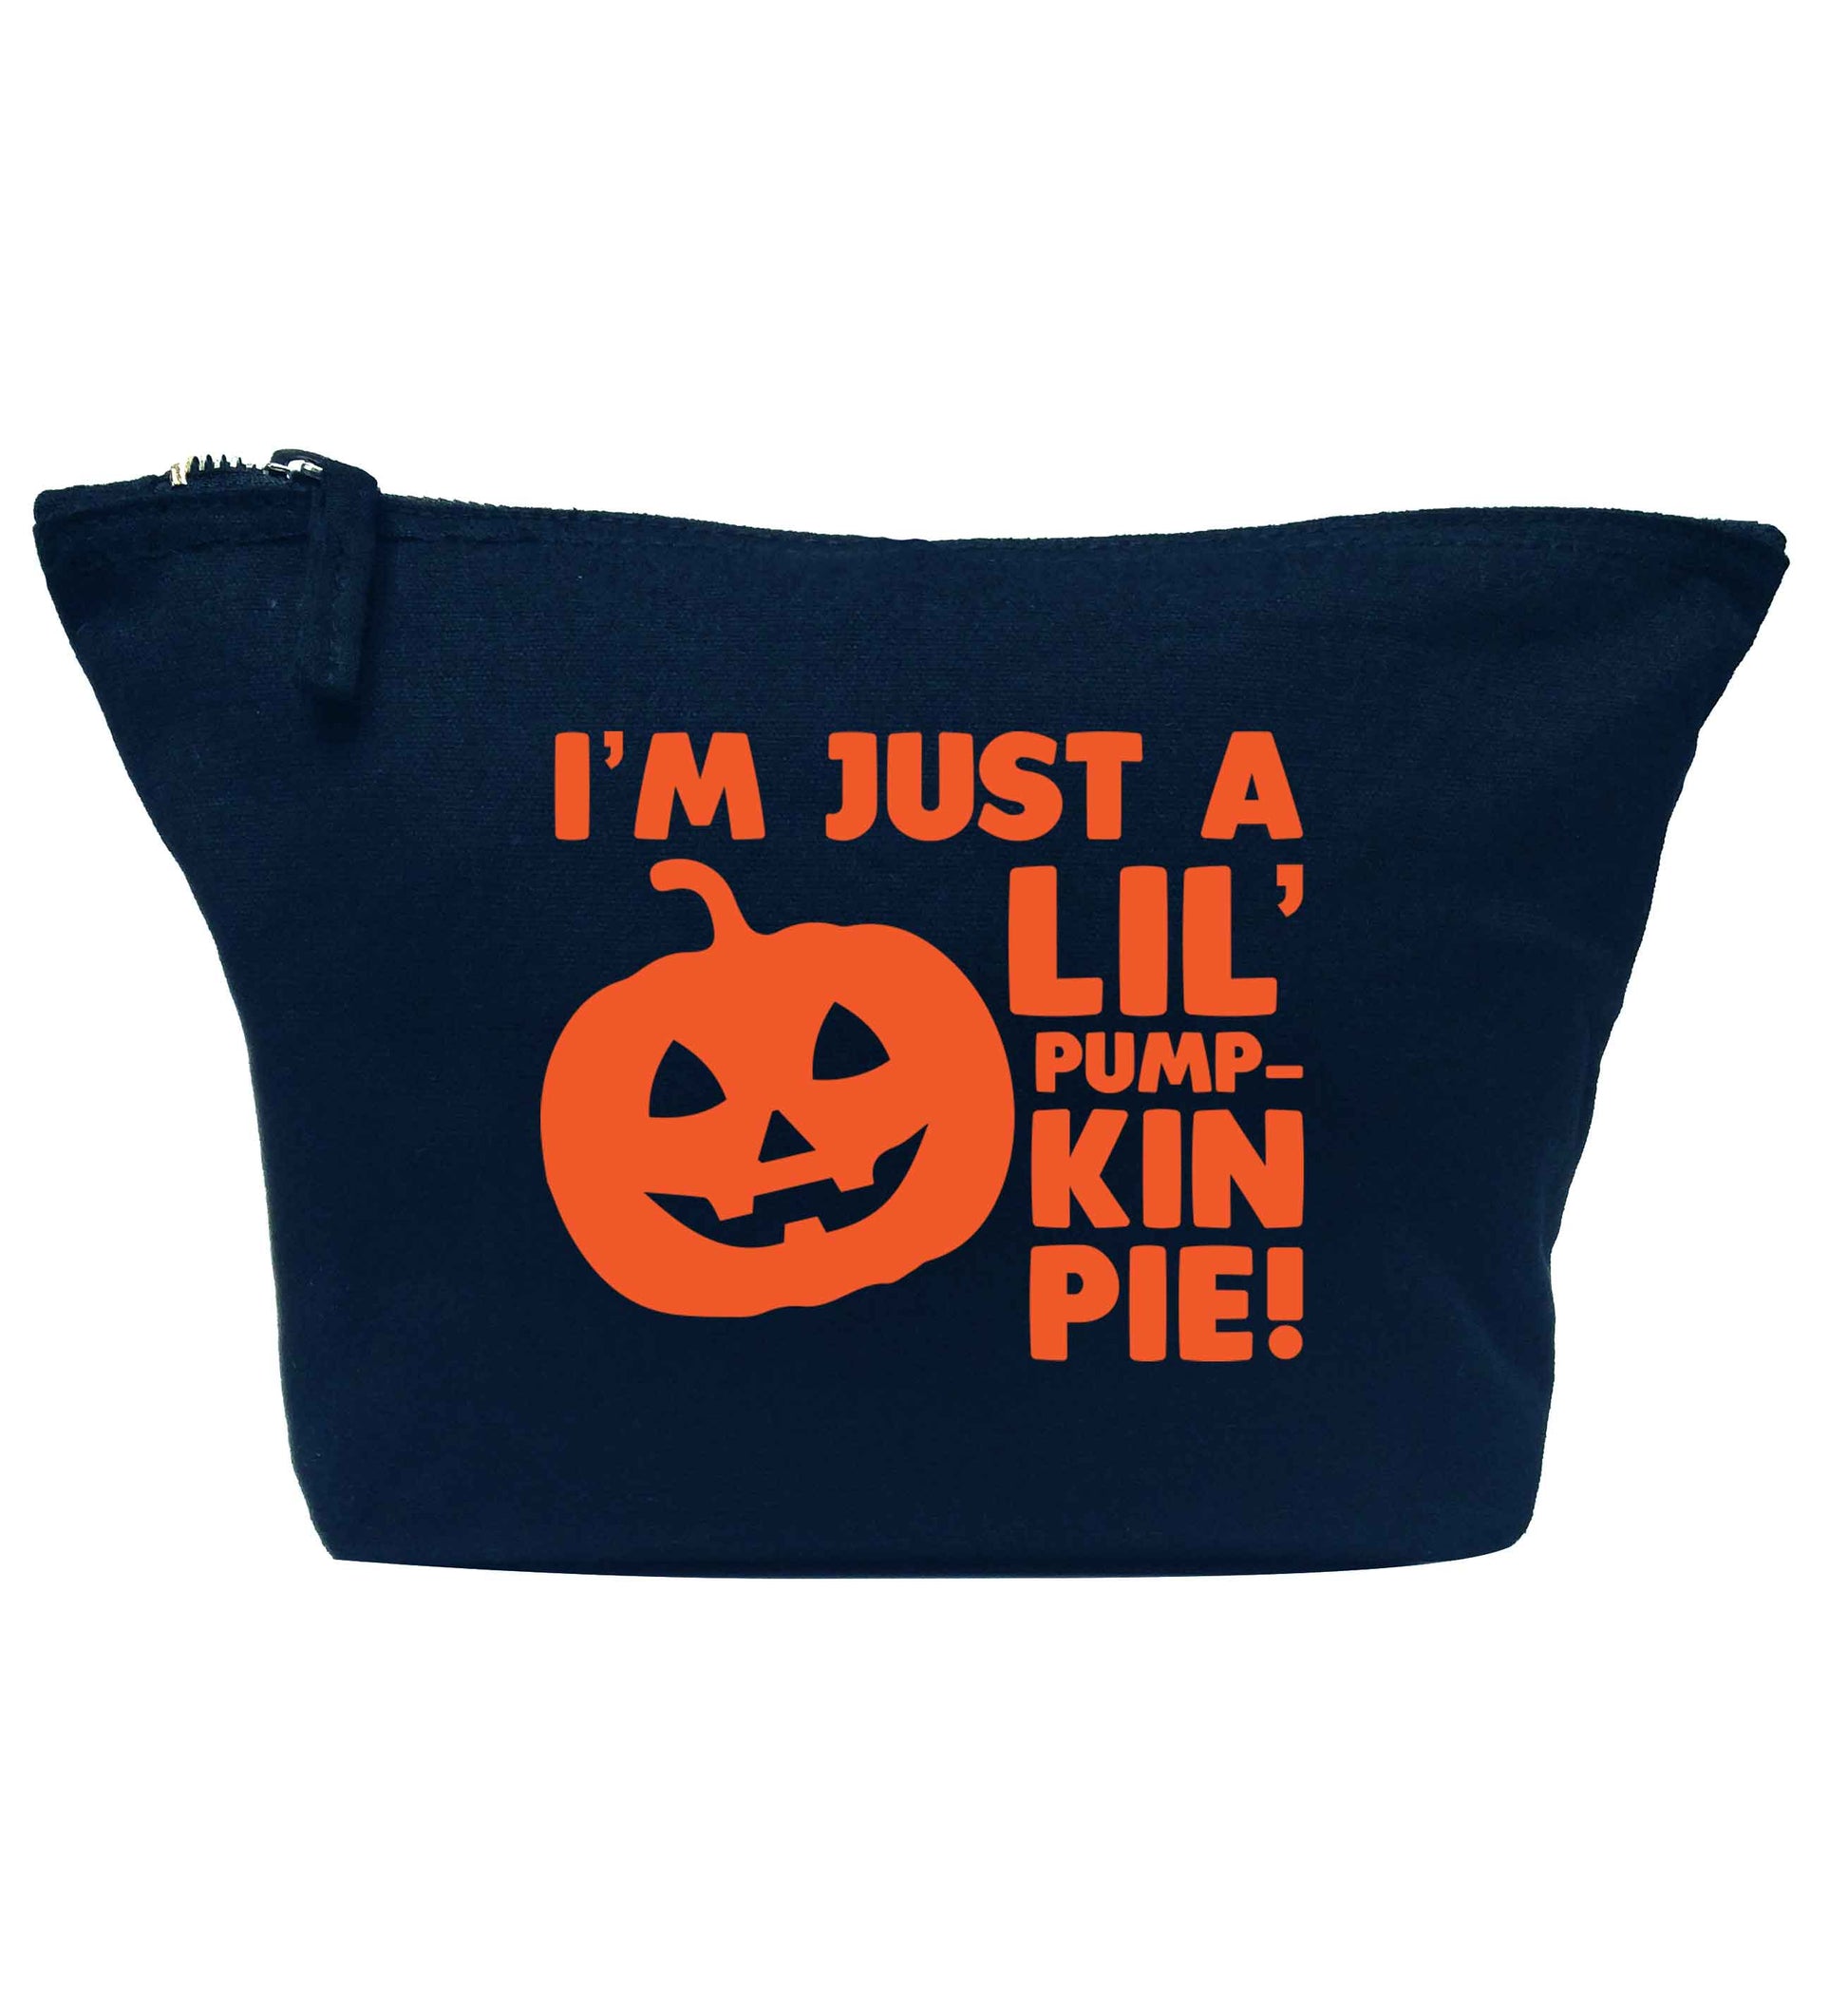 I'm just a lil' pumpkin pie navy makeup bag